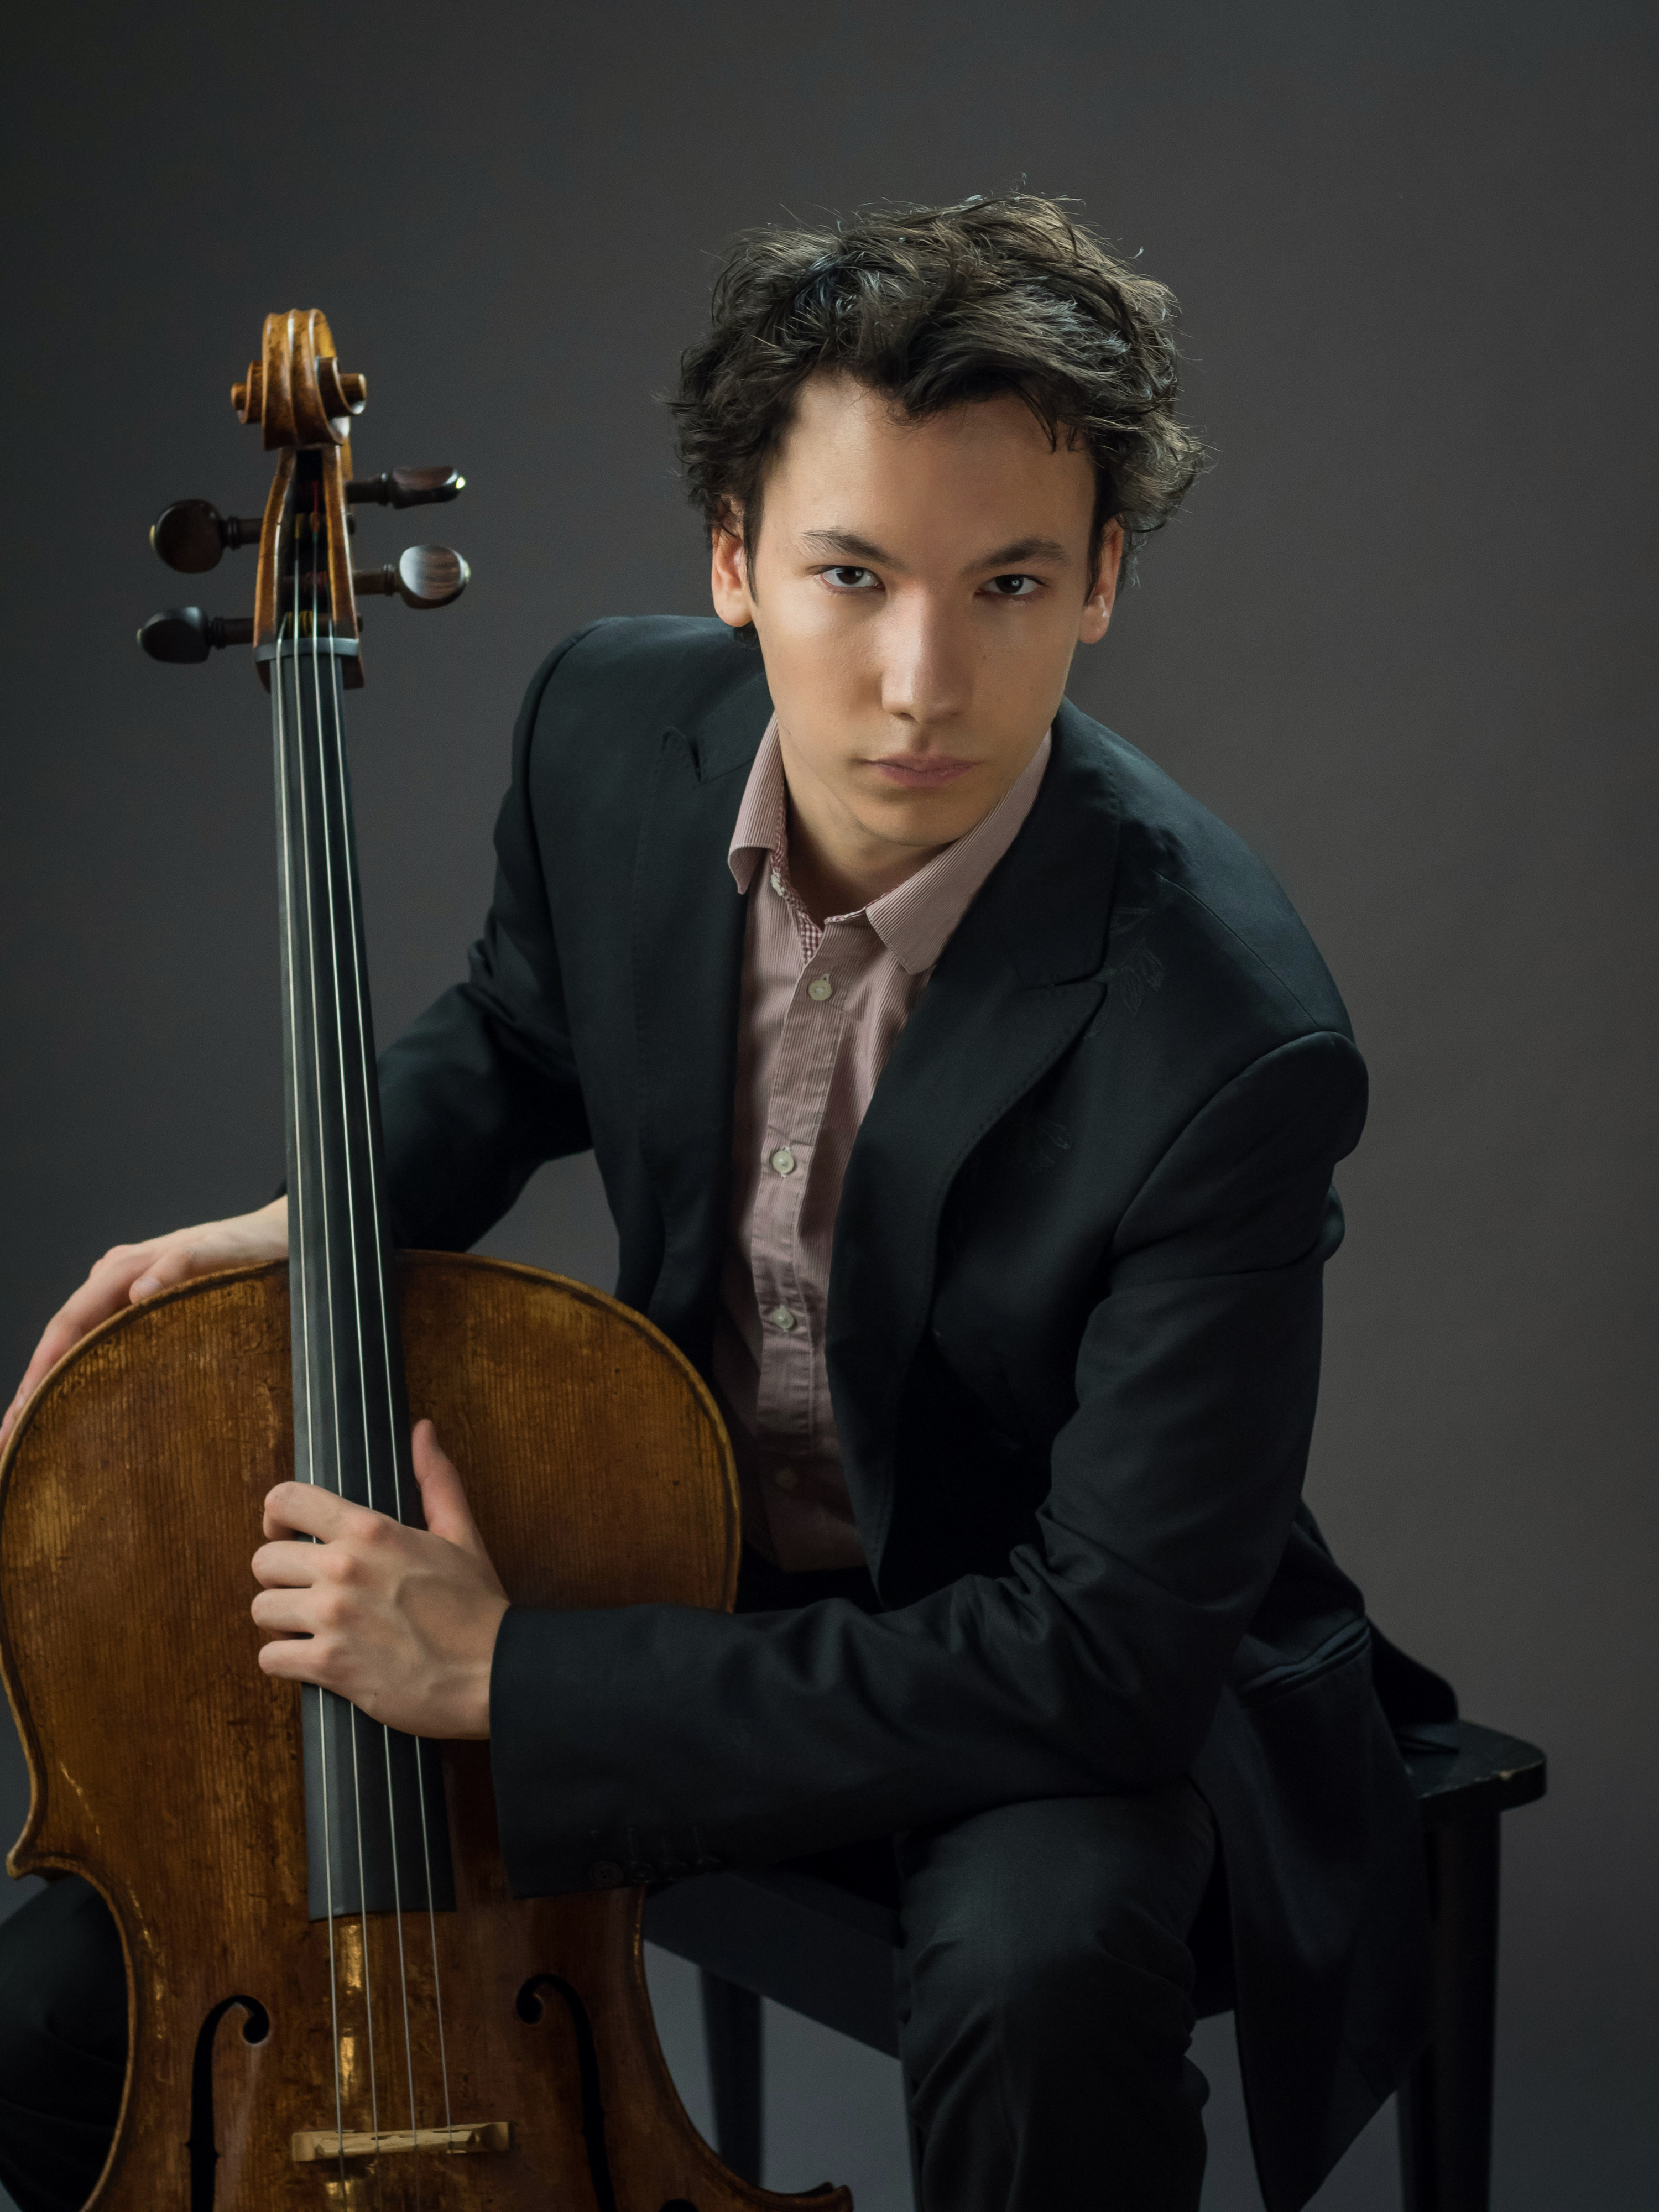 Edgar Moreau, la nuova star del violoncello al Santa Cecilia